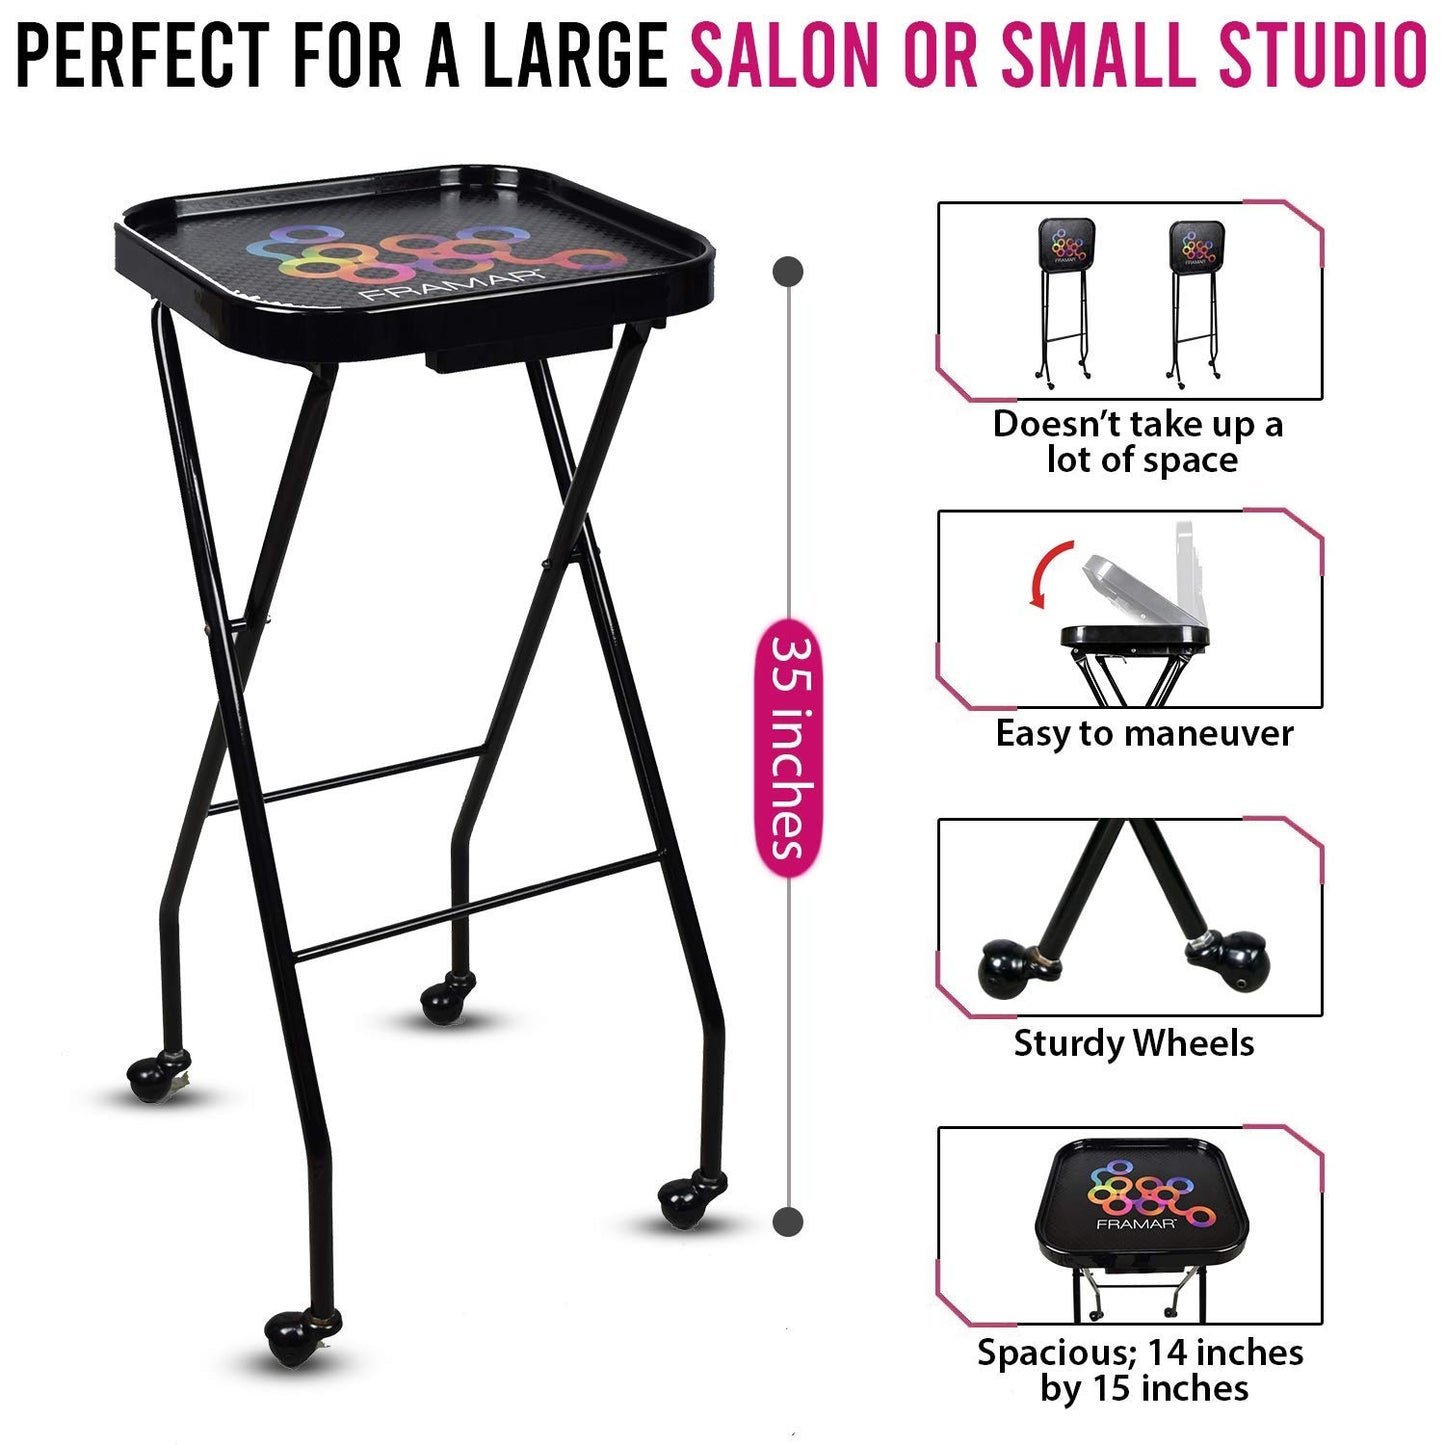 Framar Premium Salon Folding Trolley - Salon Trolley, Salon Tray, Salon Cart Folds up for easy storage